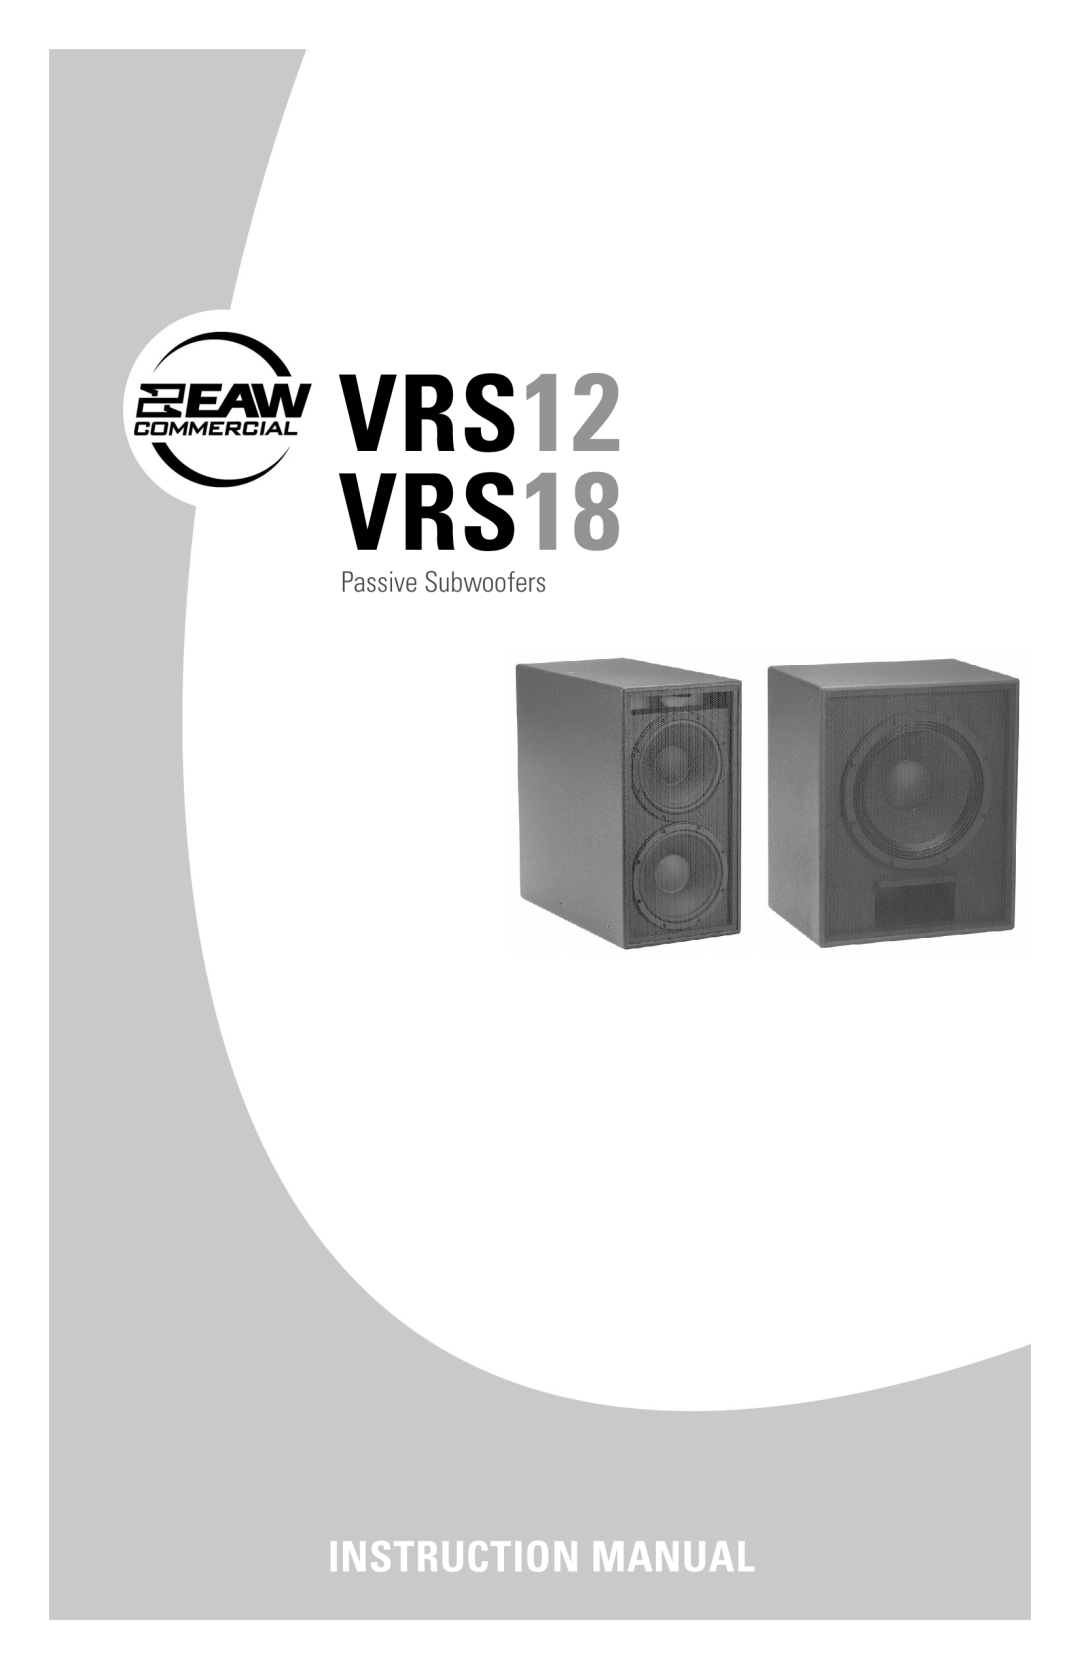 EAW VRS12 VRS18 instruction manual Passive Subwoofers 